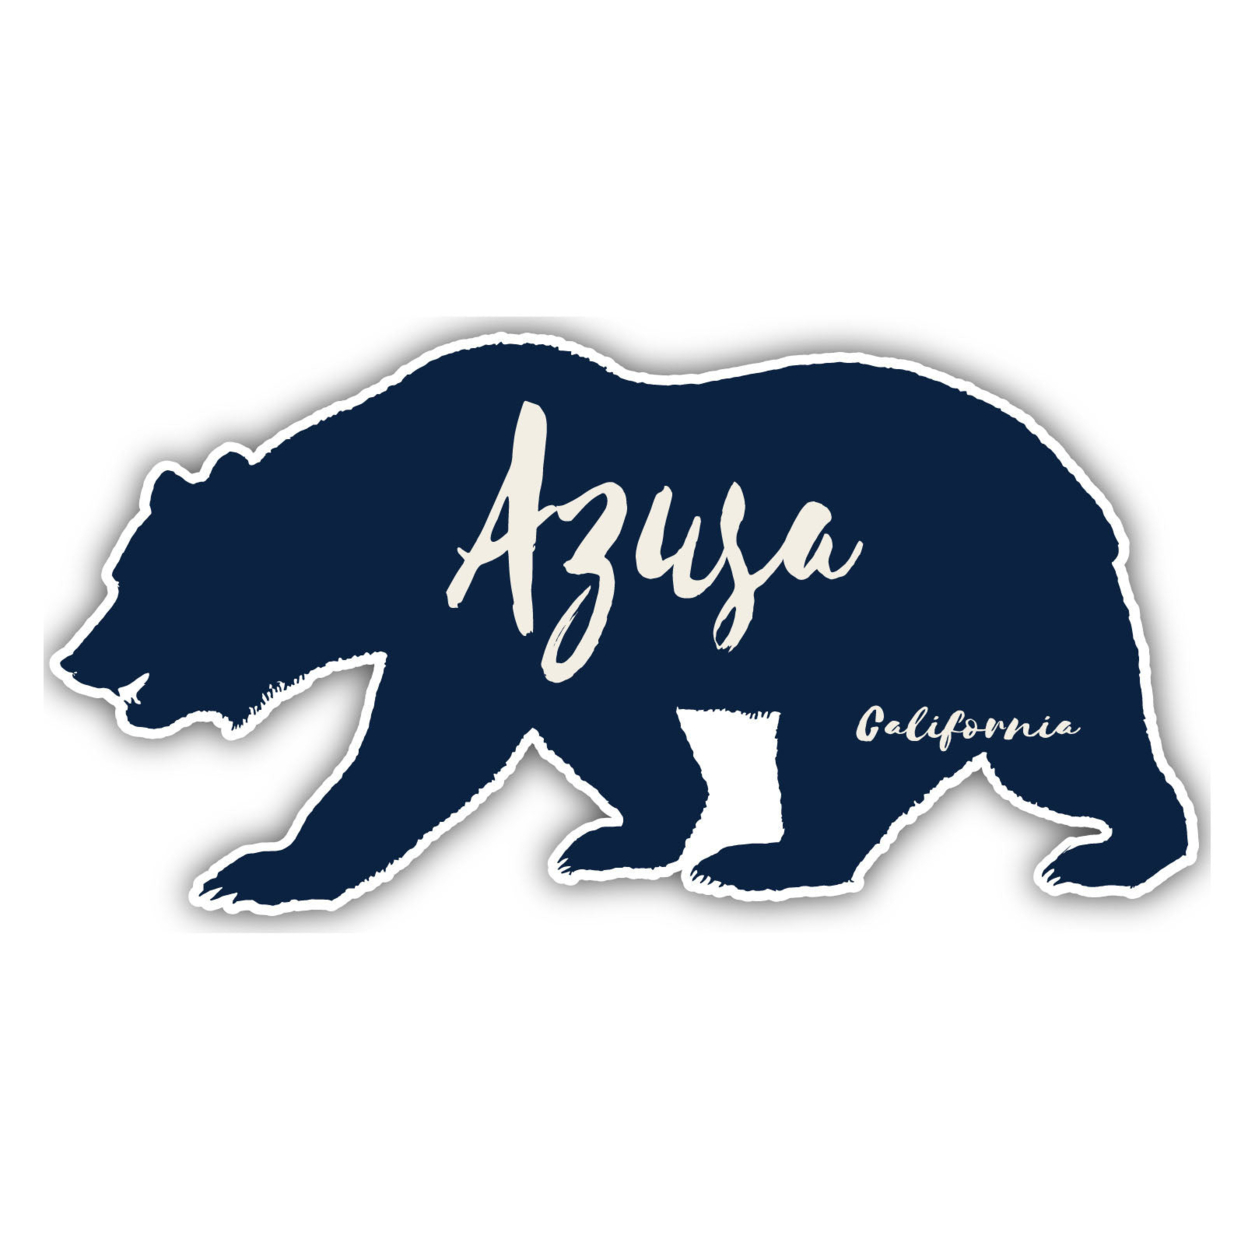 Azusa California Souvenir Decorative Stickers (Choose Theme And Size) - 4-Pack, 8-Inch, Bear